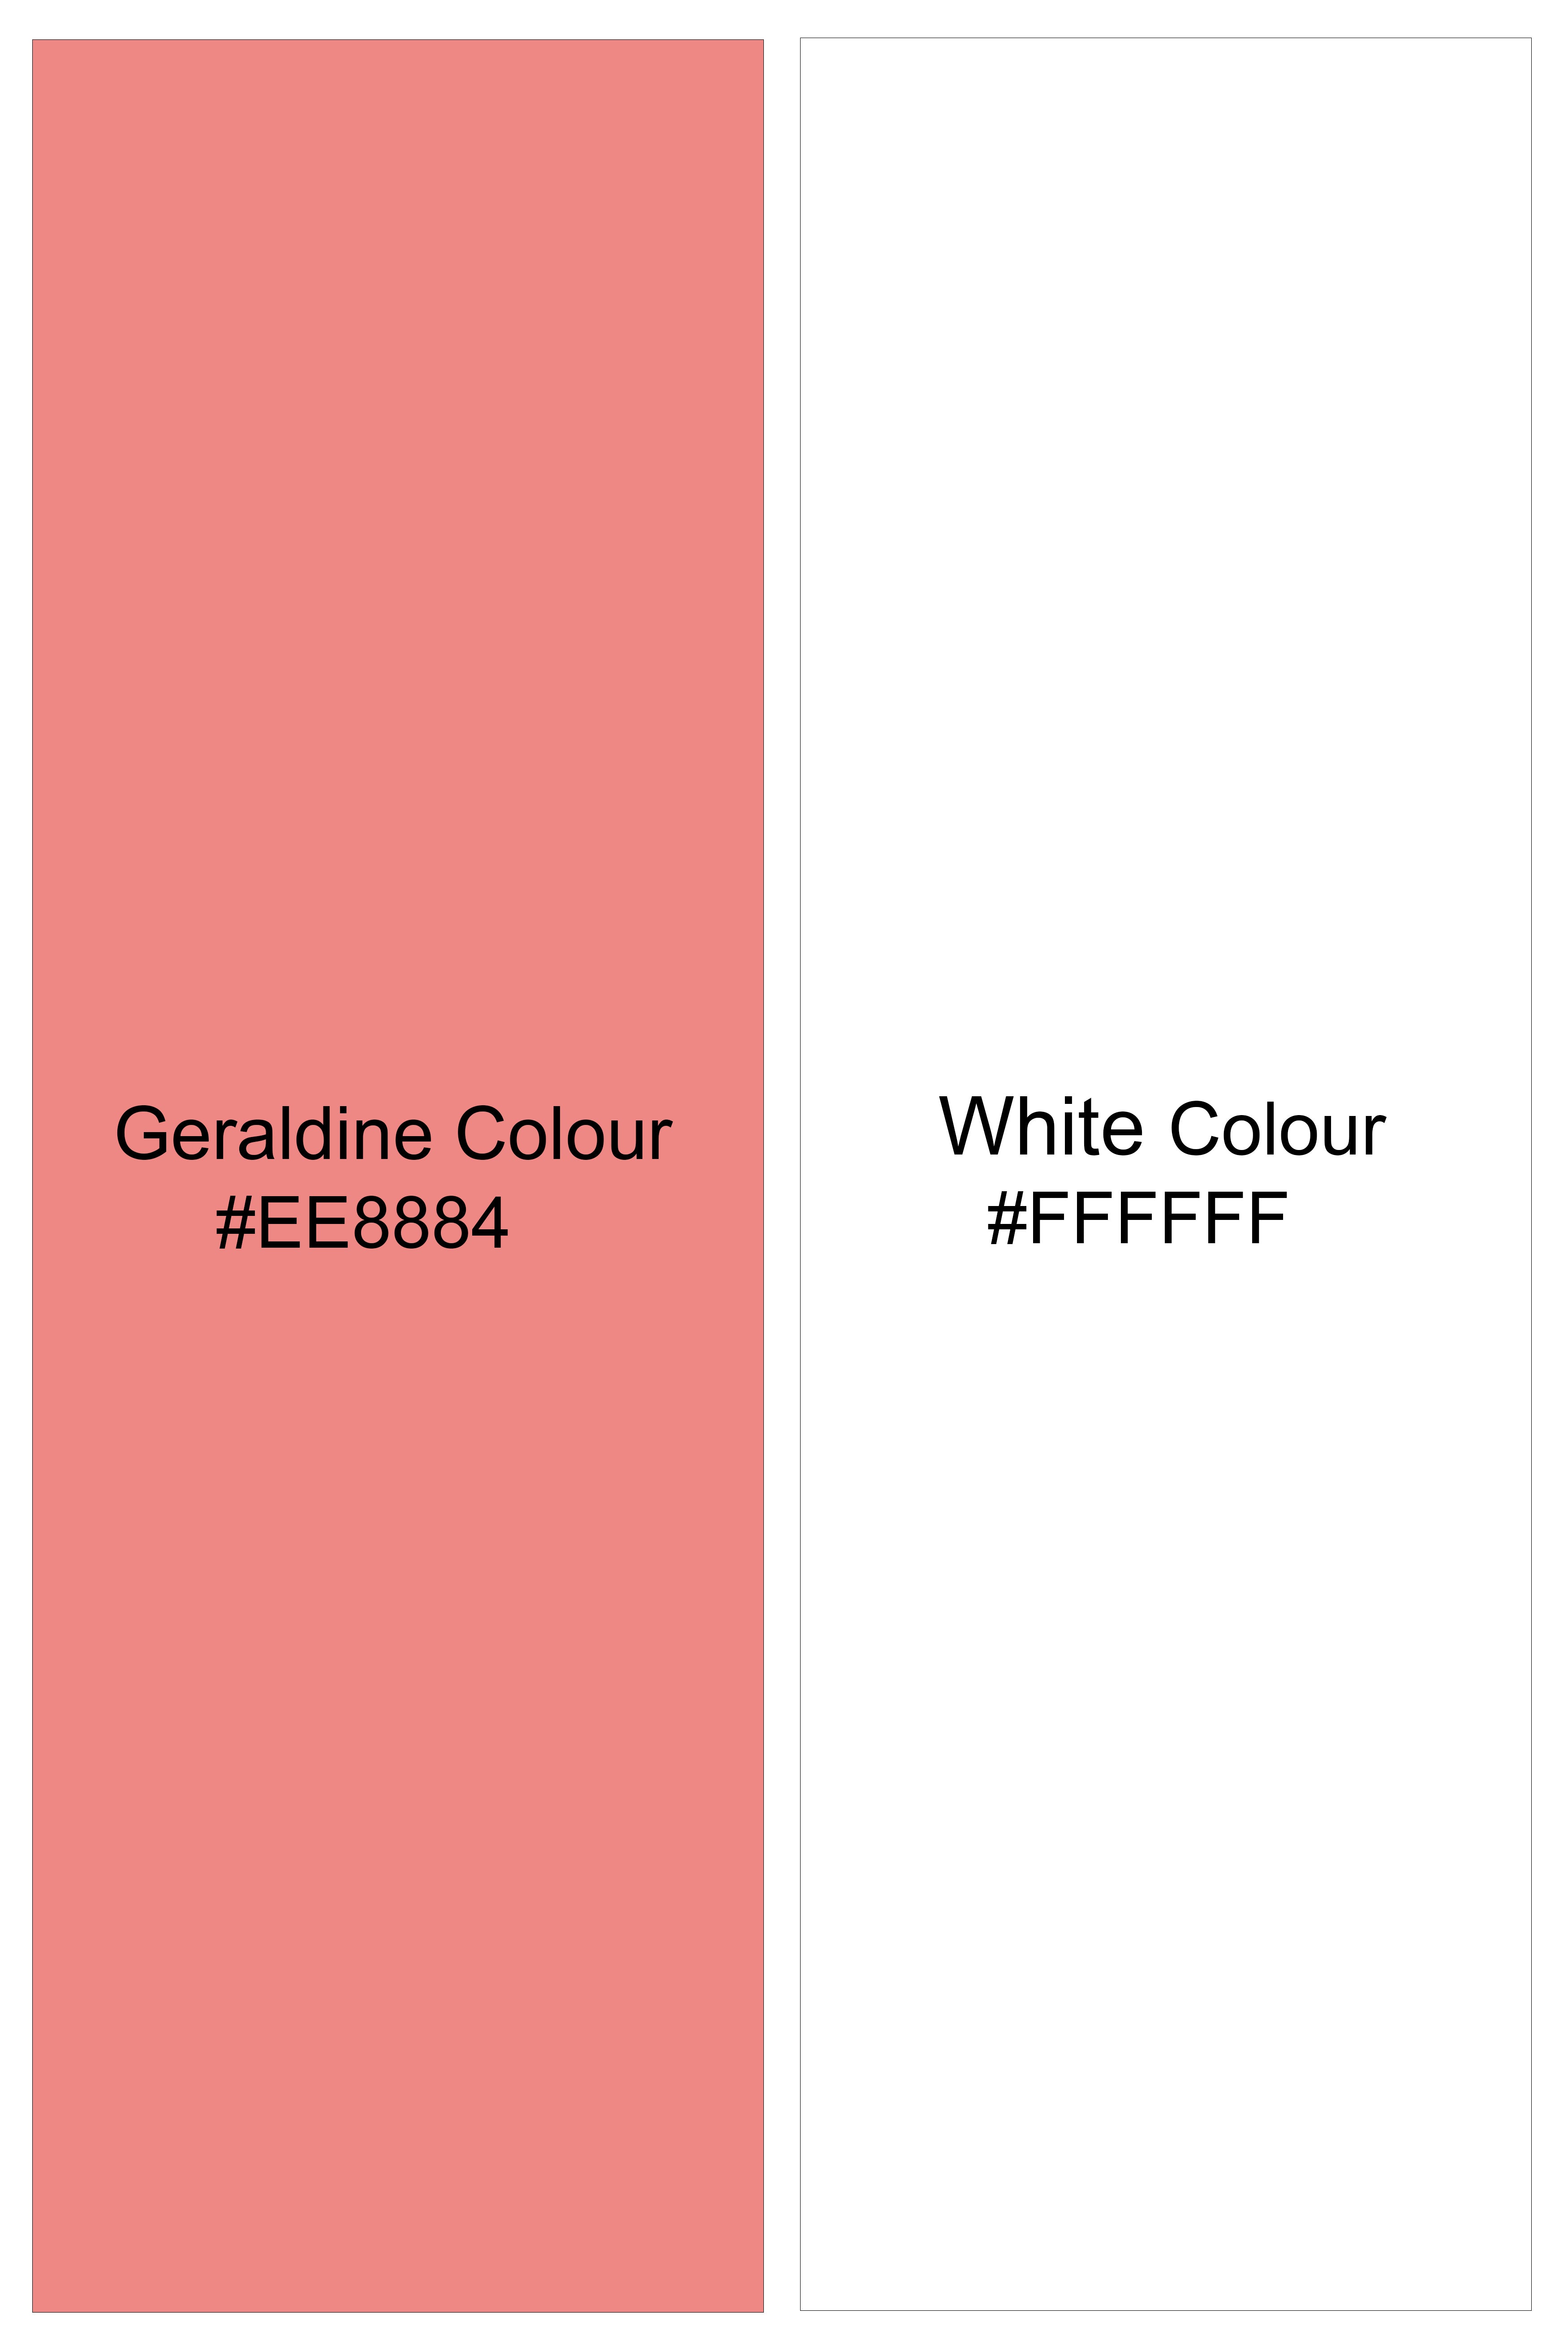 Geraldine Orange and White Striped Dobby Textured Premium Cotton Shirt